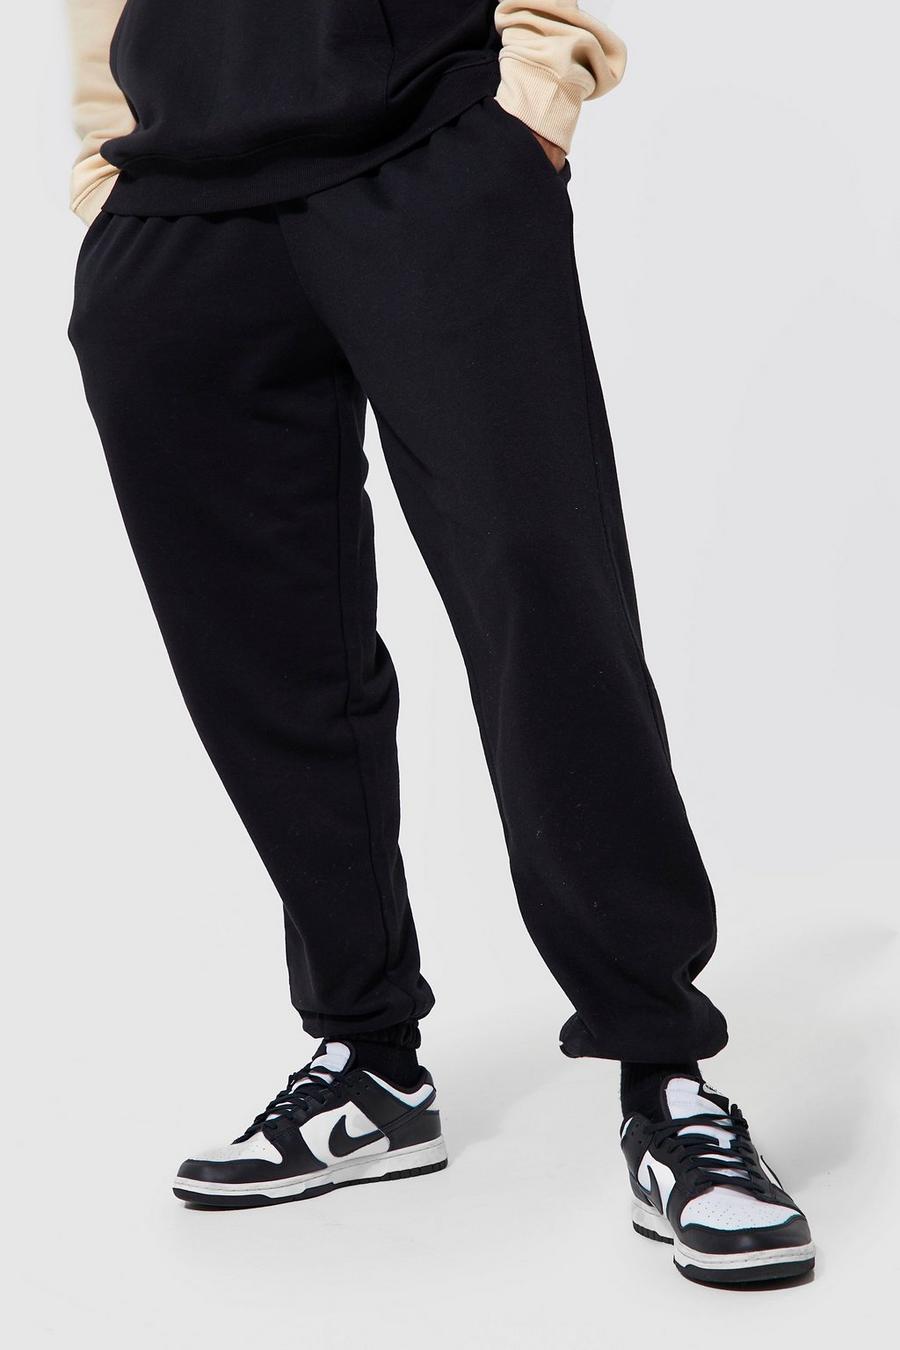 Black nero מכנסי ריצה בייסיק בגזרה משוחררת ובשילוב כותנת REEL, לגברים גבוהים image number 1